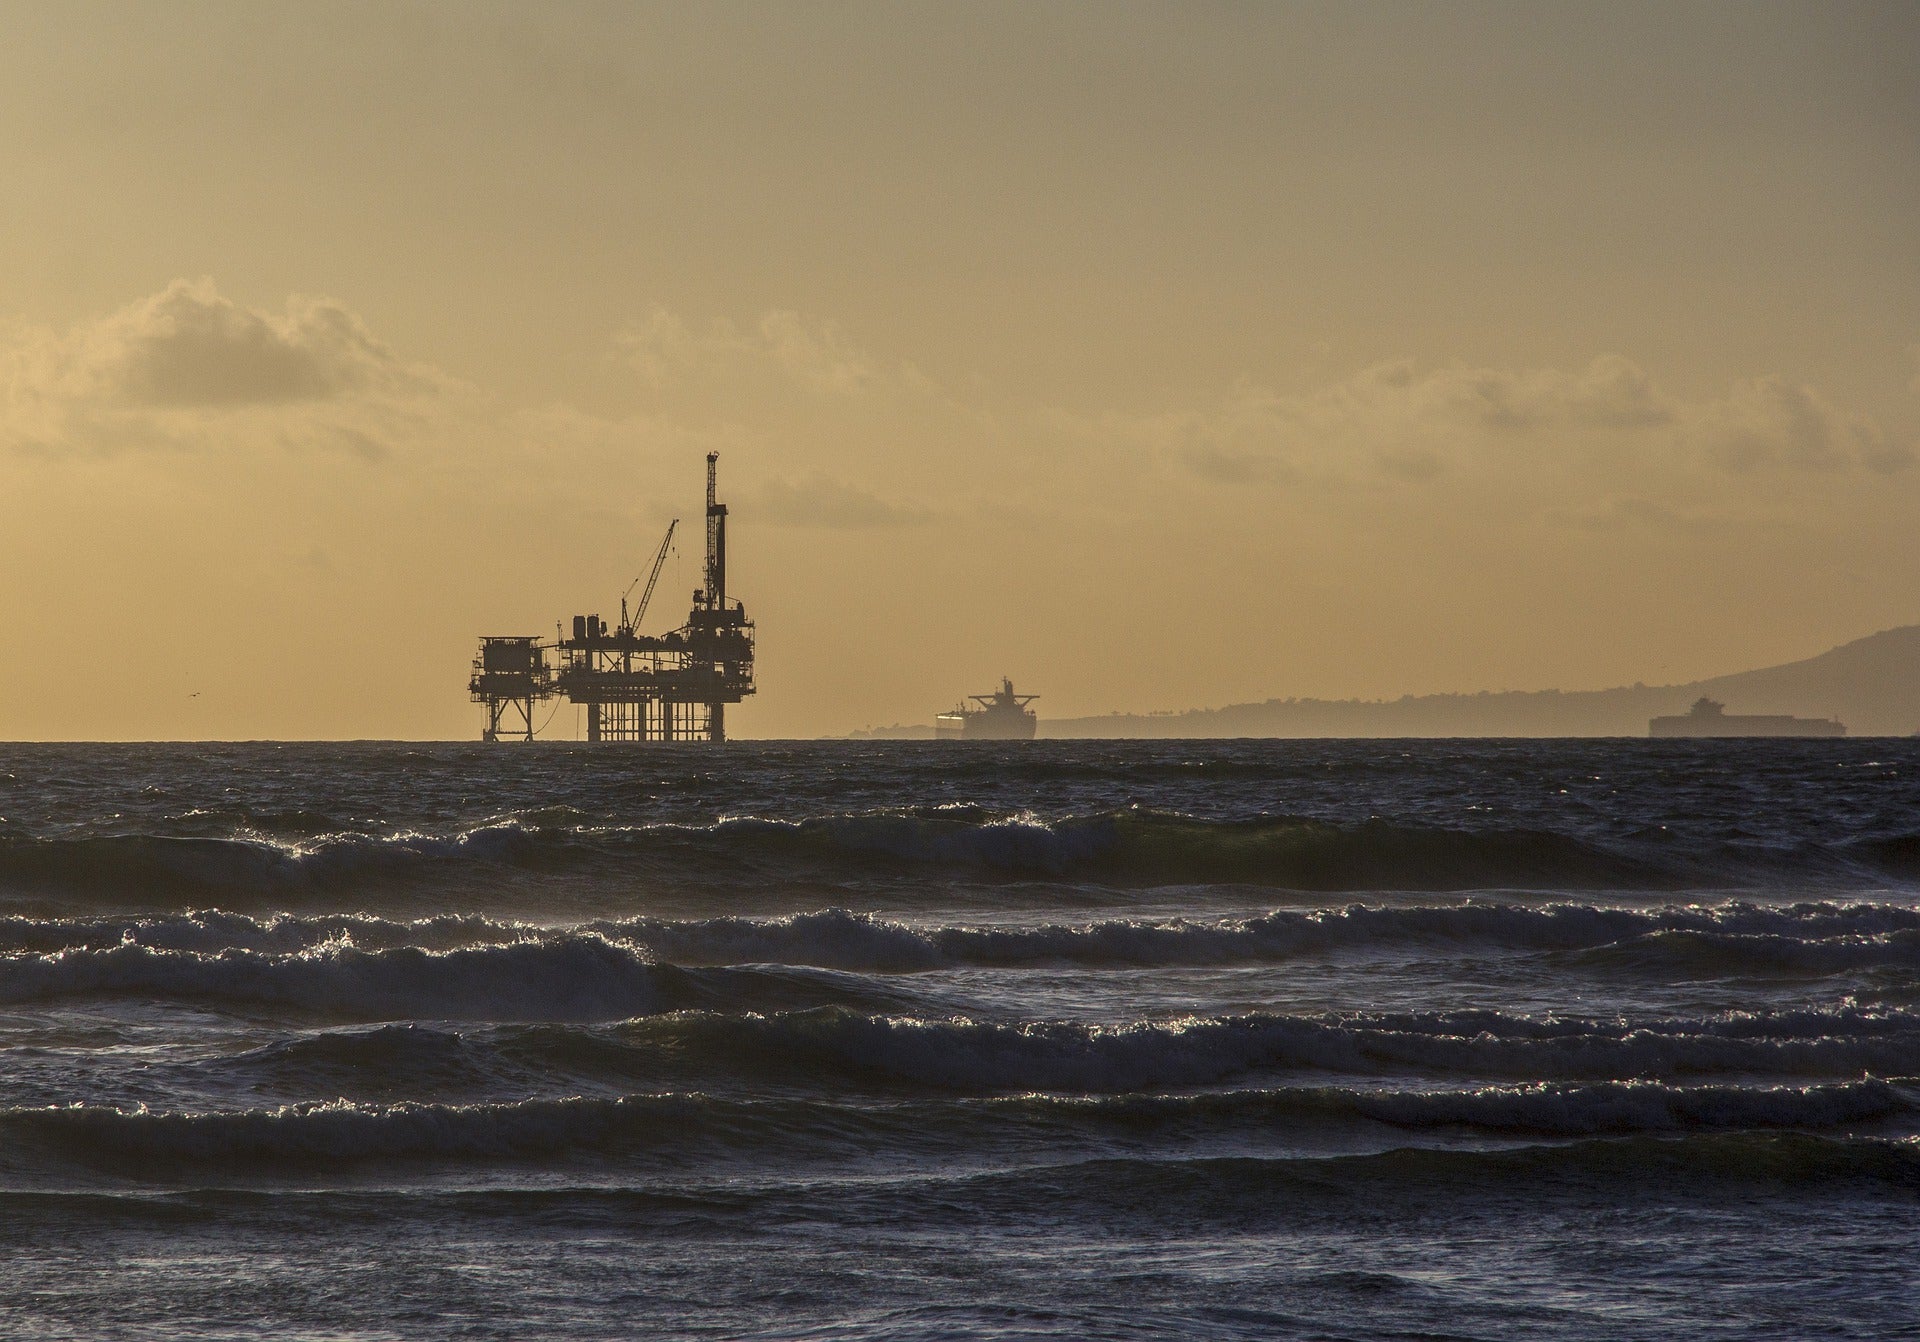 Petrobras seeks bidders for two exploration assets offshore Brazil